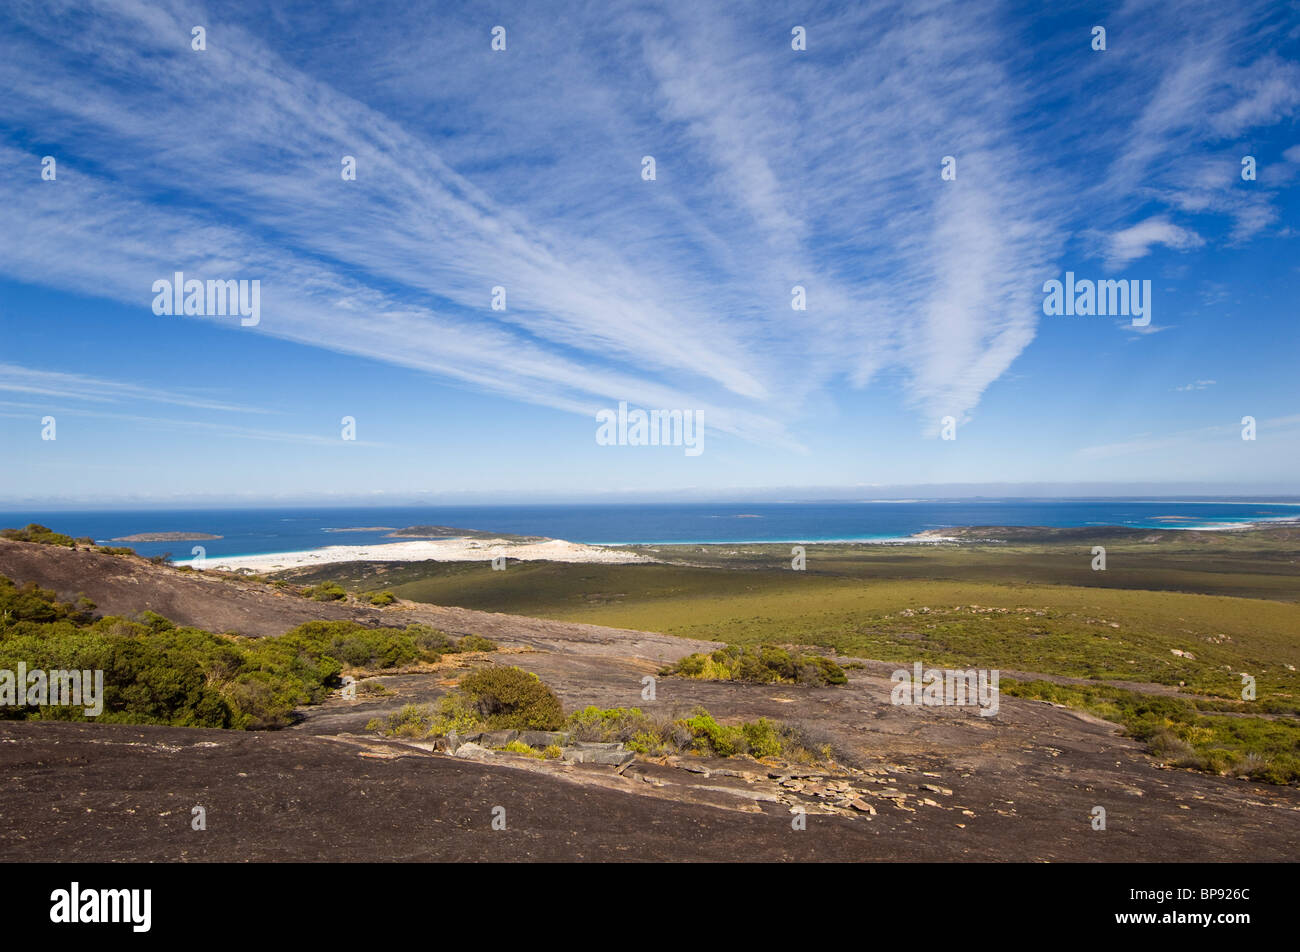 View from Mount Arid, Cape Arid National Park, Western Australia. Stock Photo